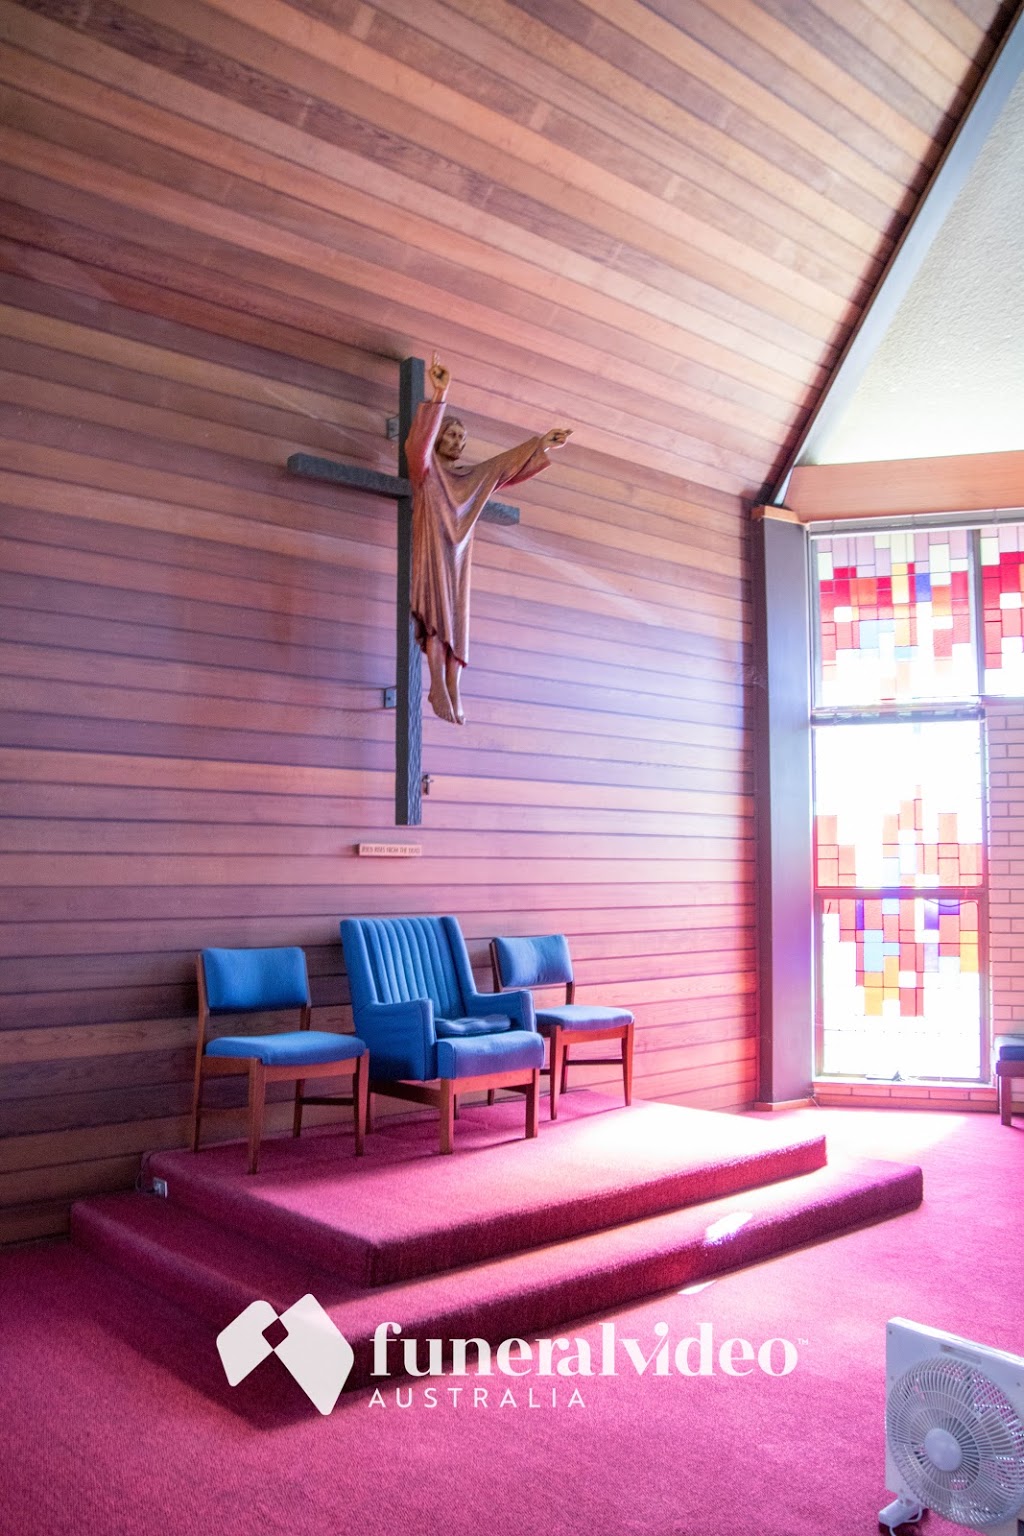 St Andrews Catholic Church | church | 6 Prince Edward St, Malabar NSW 2036, Australia | 0293112062 OR +61 2 9311 2062